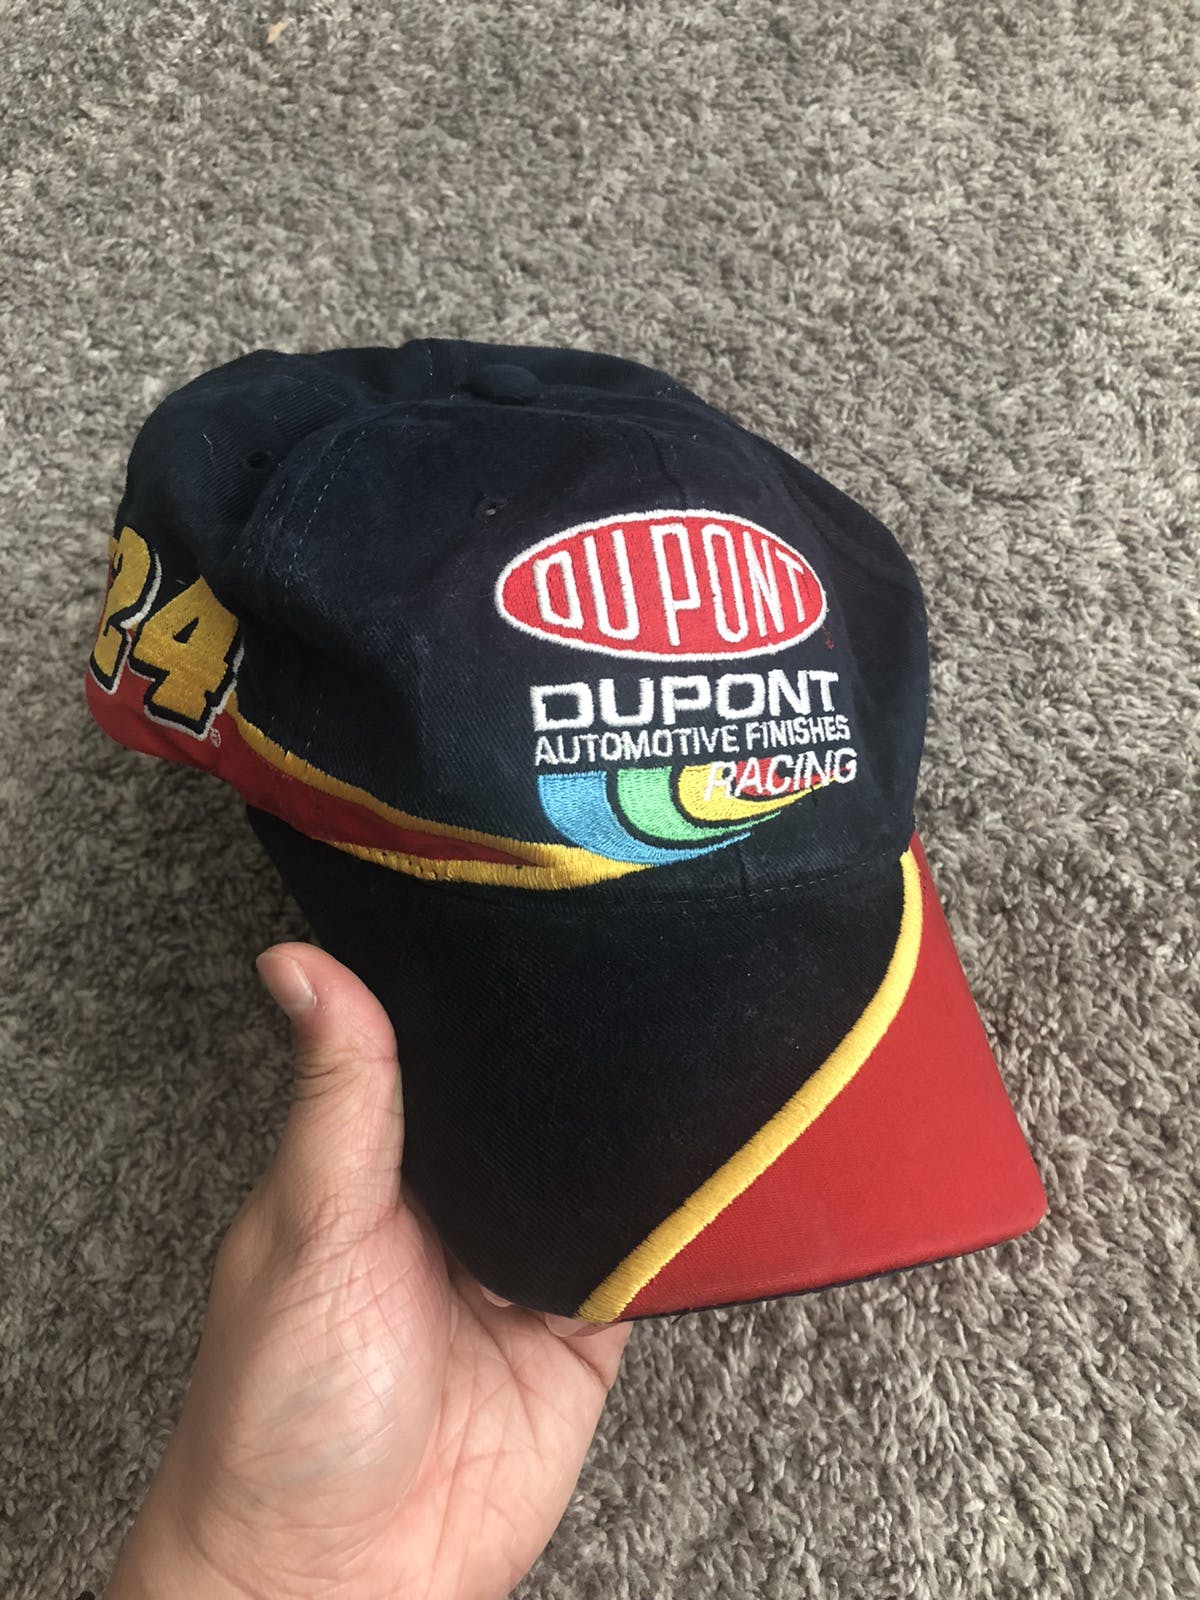 Vintage NASCAR Jeff Gordon Racing Hat - 9